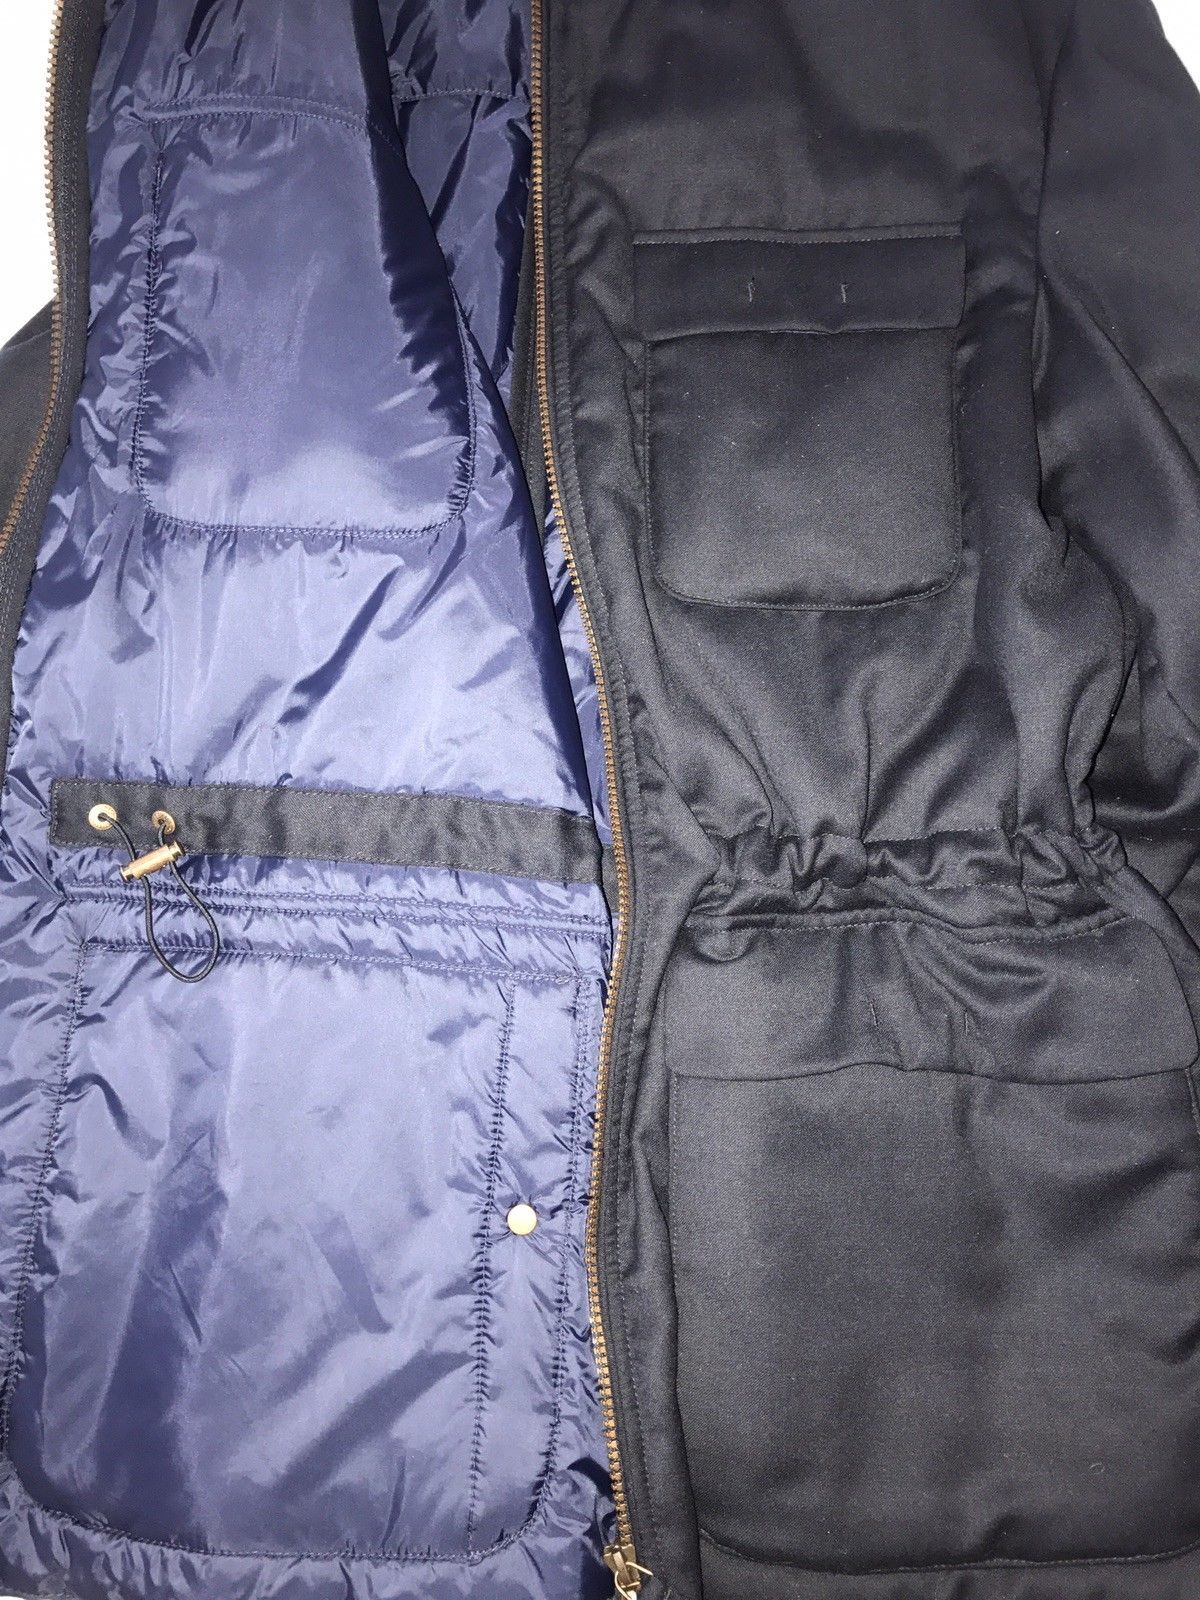 NWT $1045 Armani Collezioni Wool Navy Blue Sport Jacket 44 US (54 Eu) PCG07W